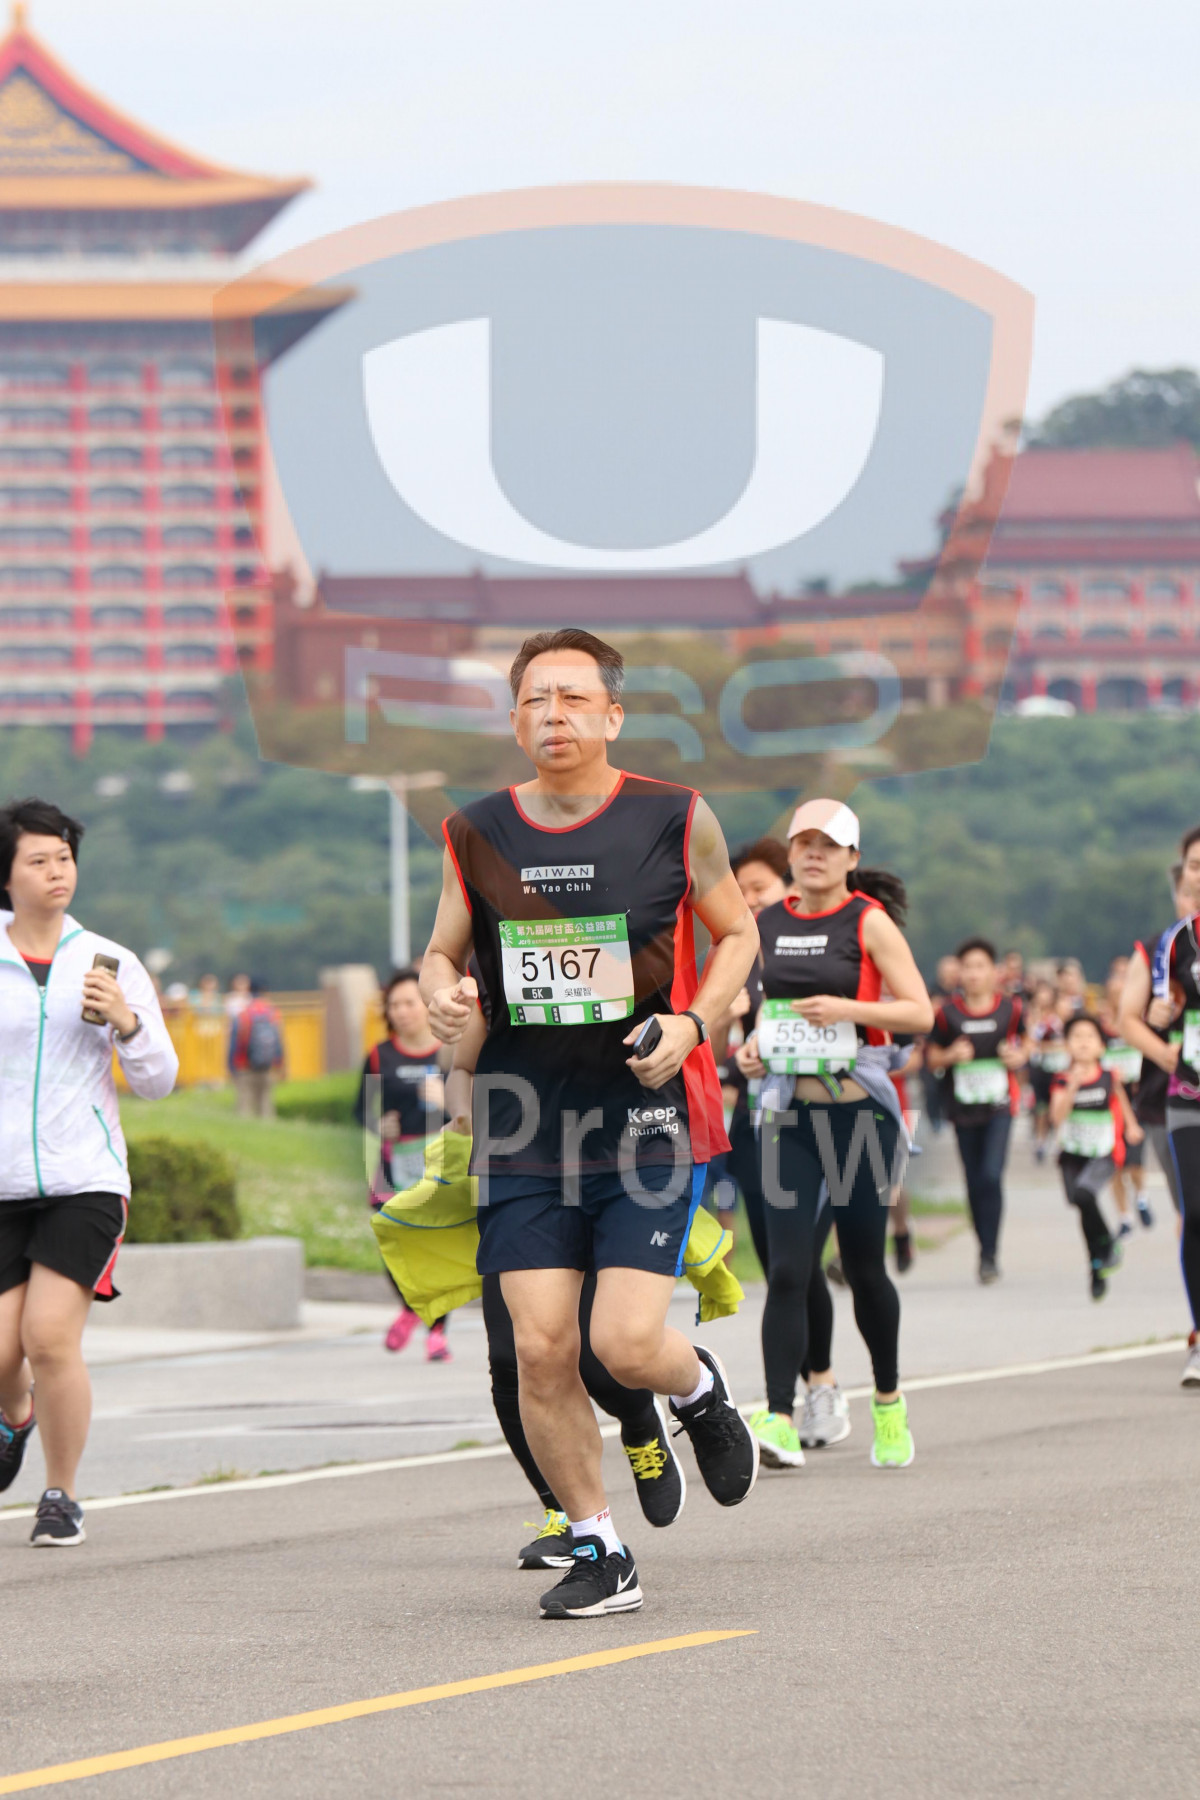 ALW AN,Nu Yao Chih,5167,Keep,Running|2018 第九屆阿甘盃公益路跑|Soryu Asuka Langley